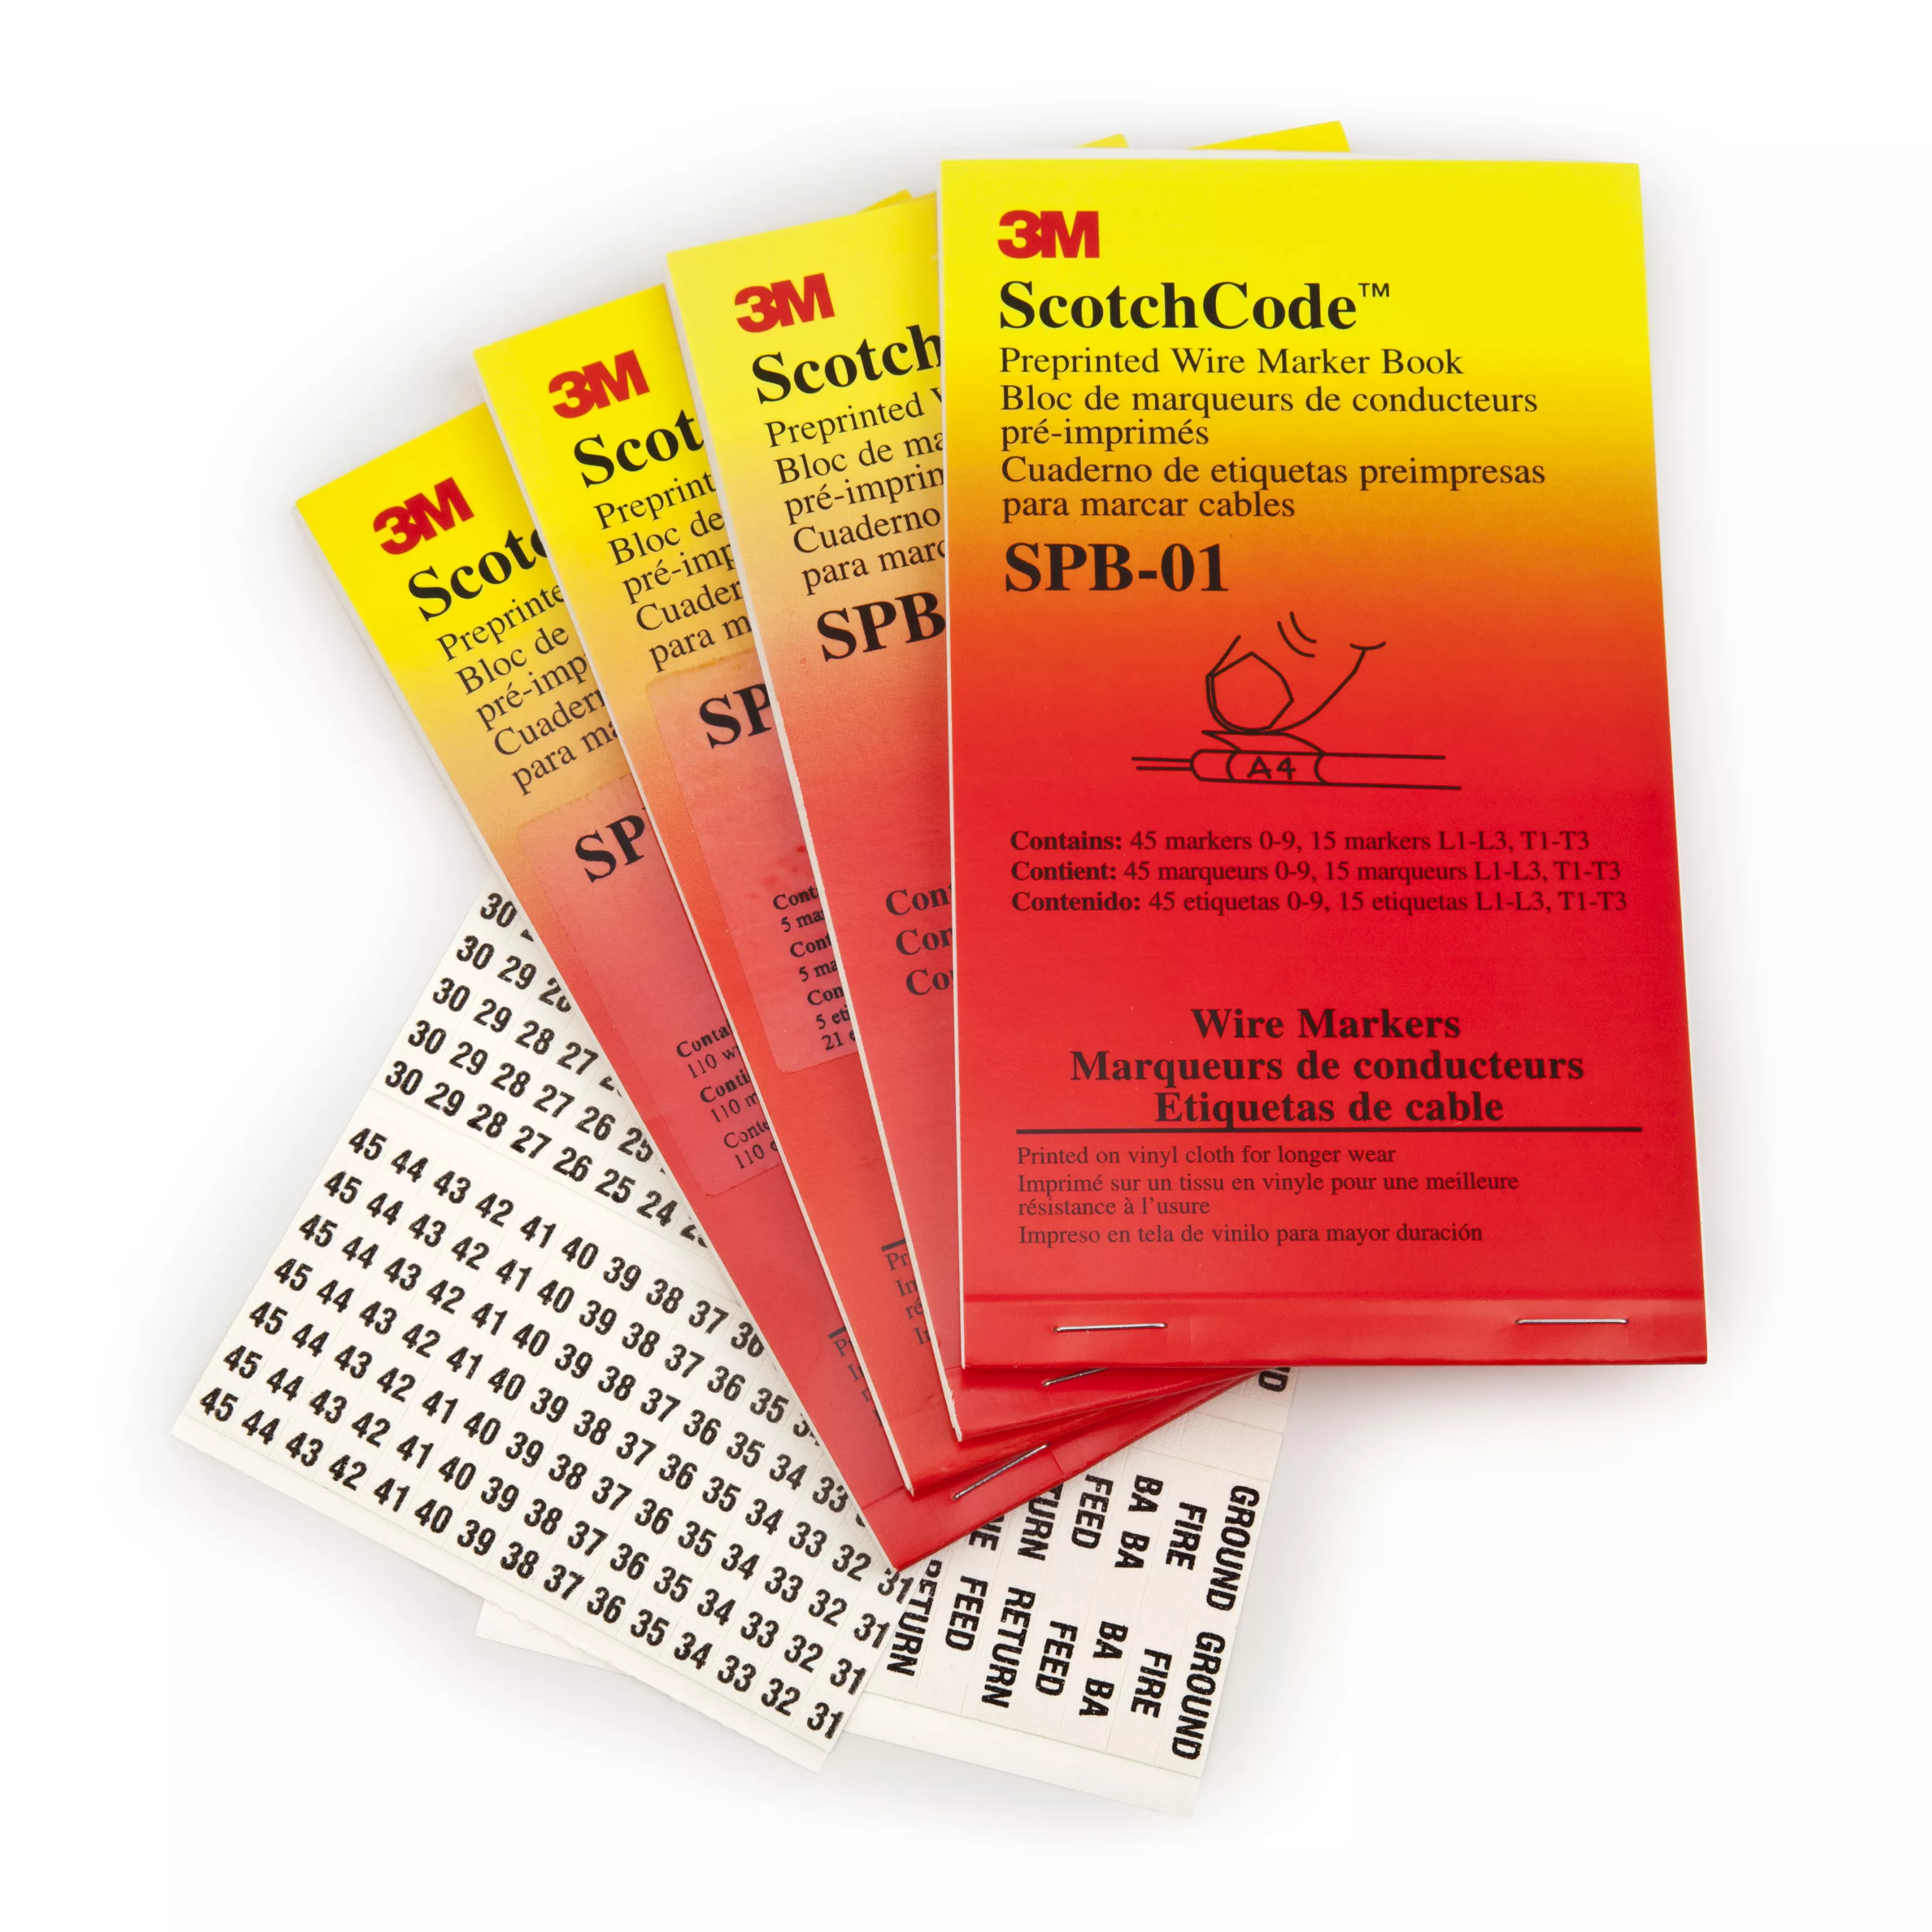 SKU 7000132484 | 3M™ ScotchCode™ Pre-Printed Wire Marker Book SPB-11